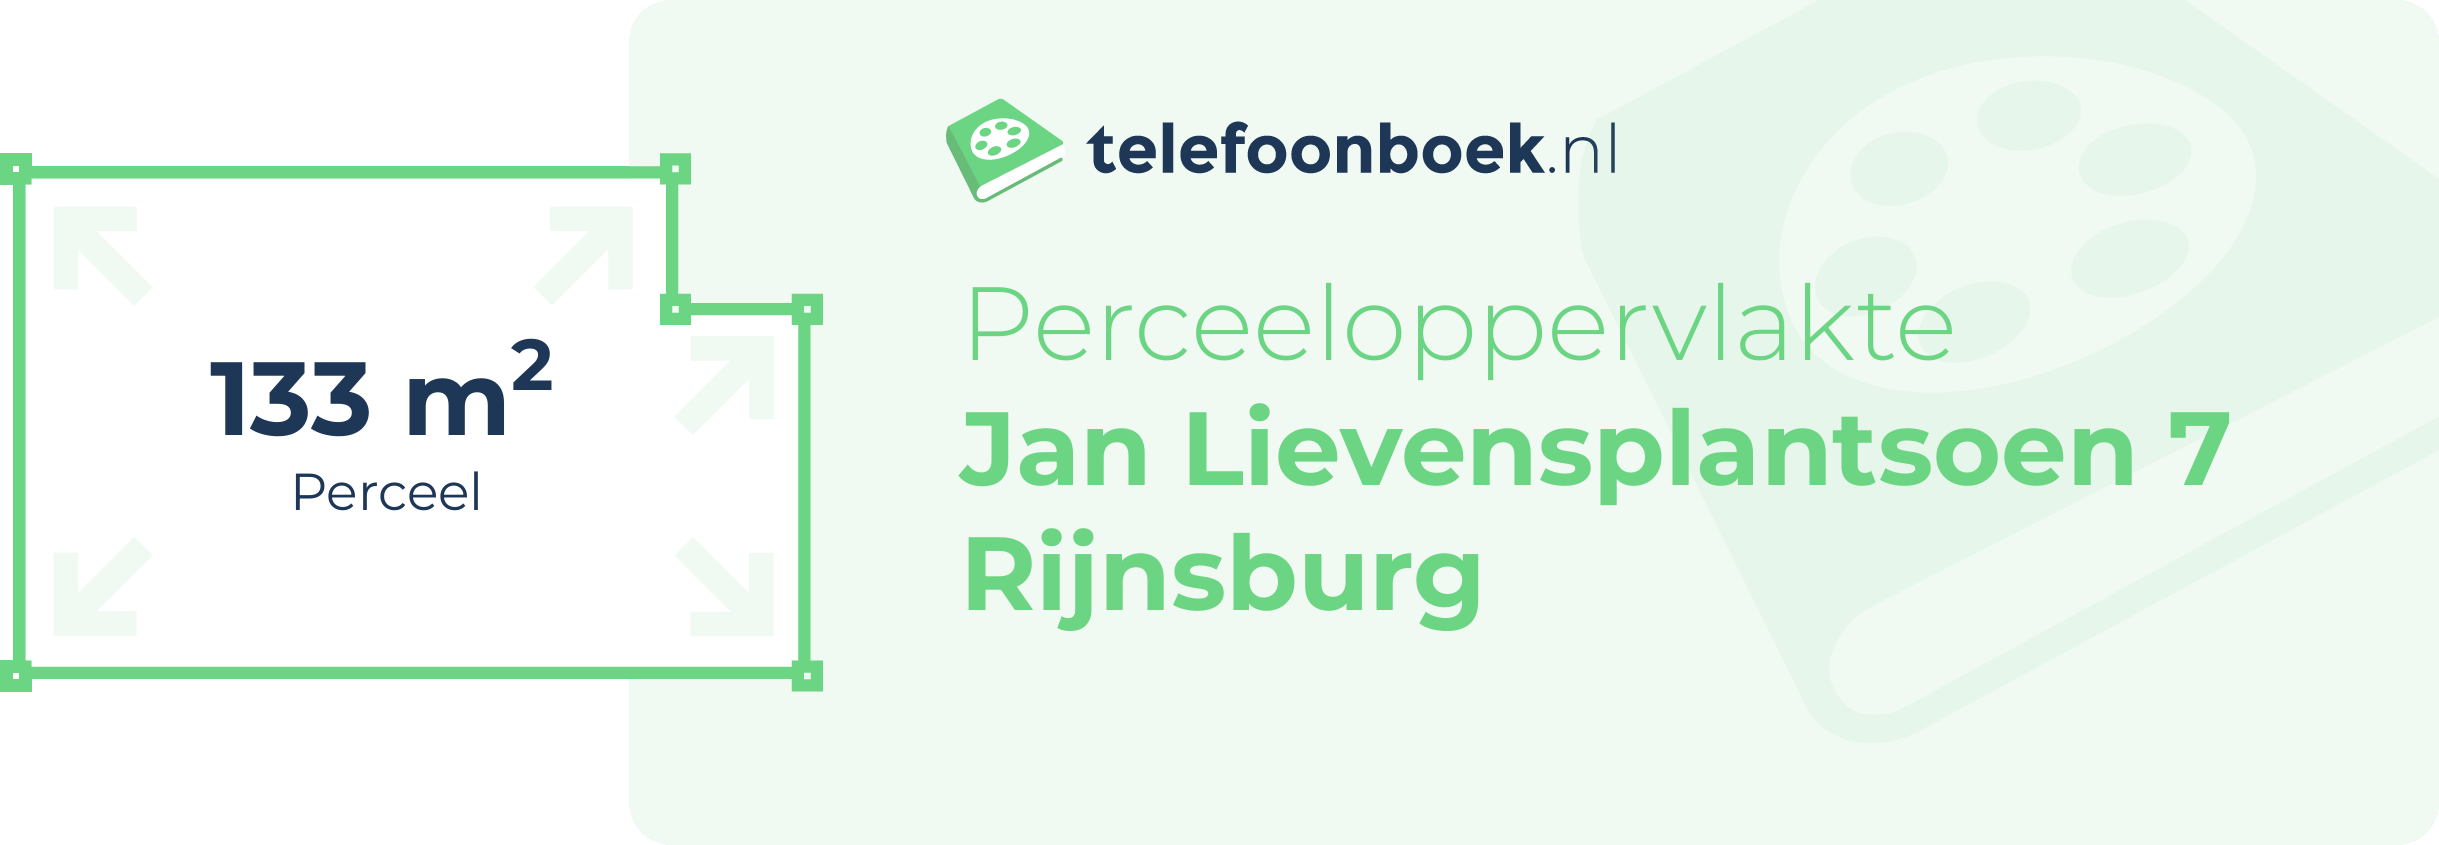 Perceeloppervlakte Jan Lievensplantsoen 7 Rijnsburg